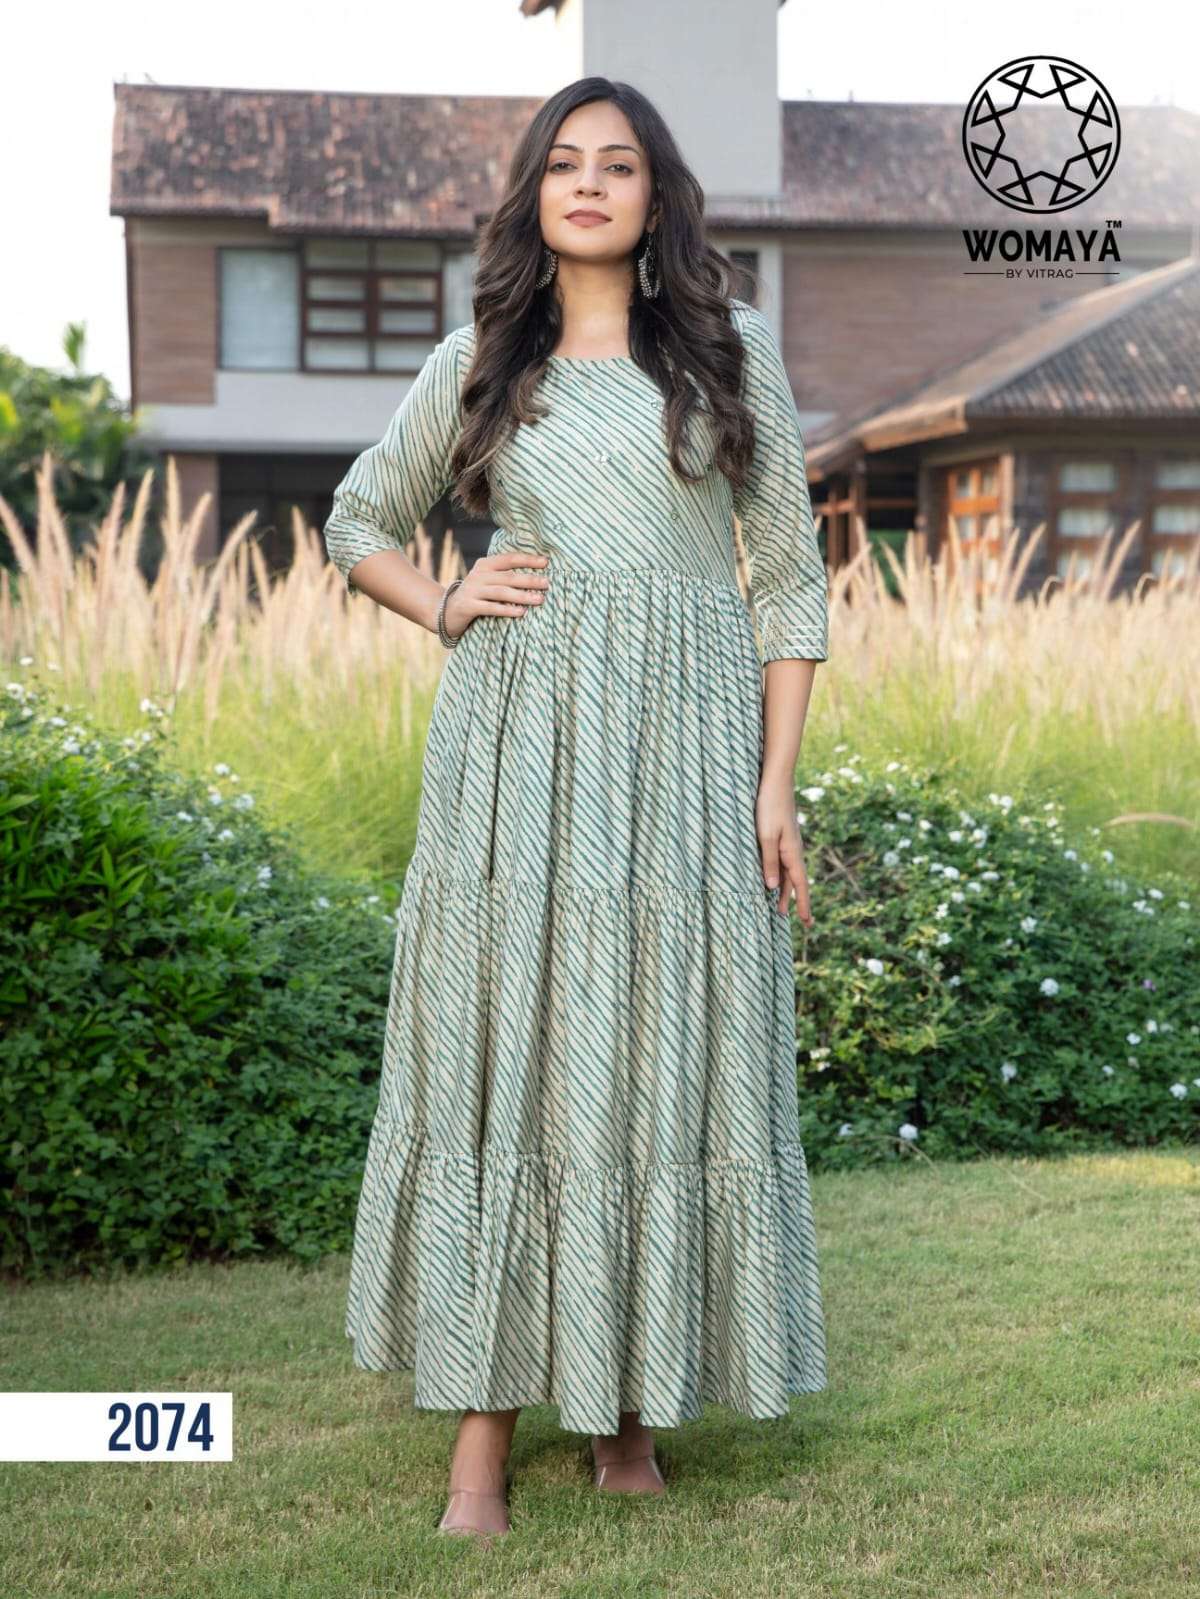 womaya vibrance silk story series latest fancy designer long kurti wholesaler surat gujarat